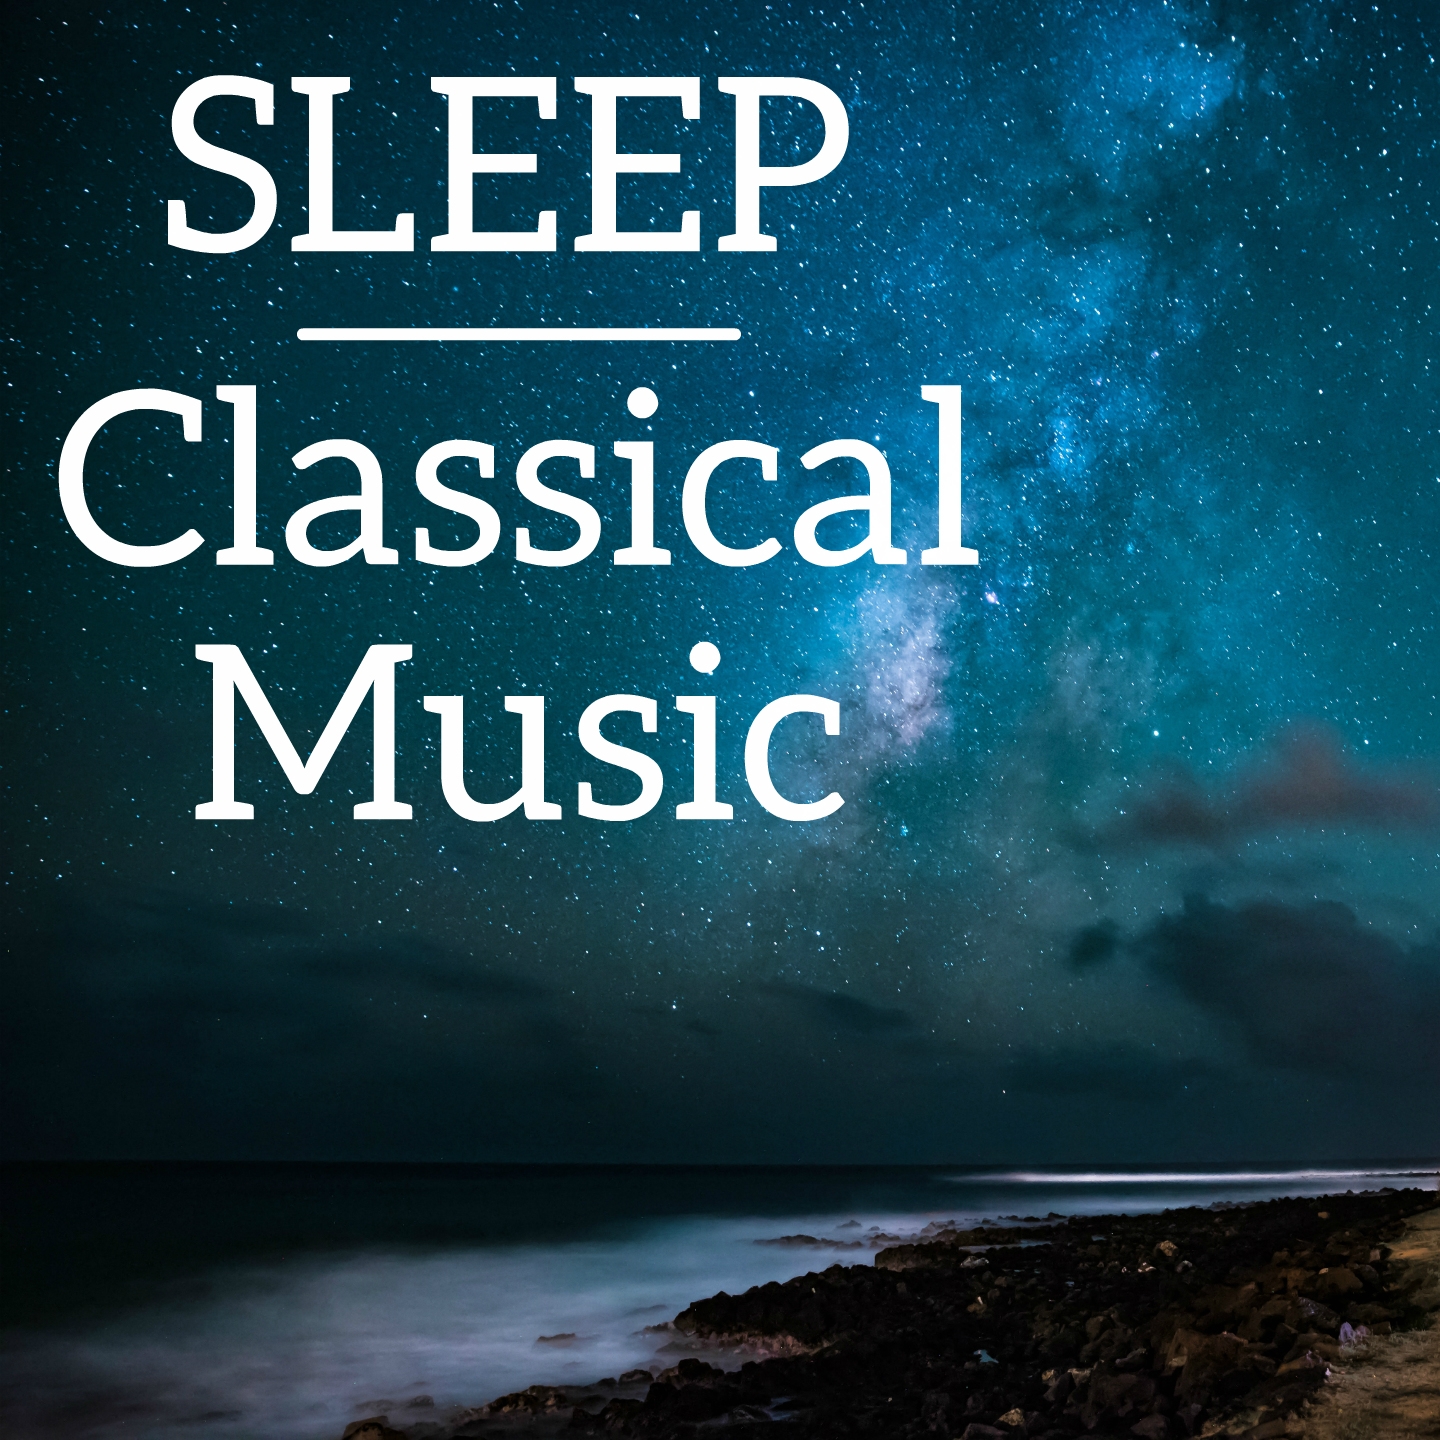 Sleep classical music